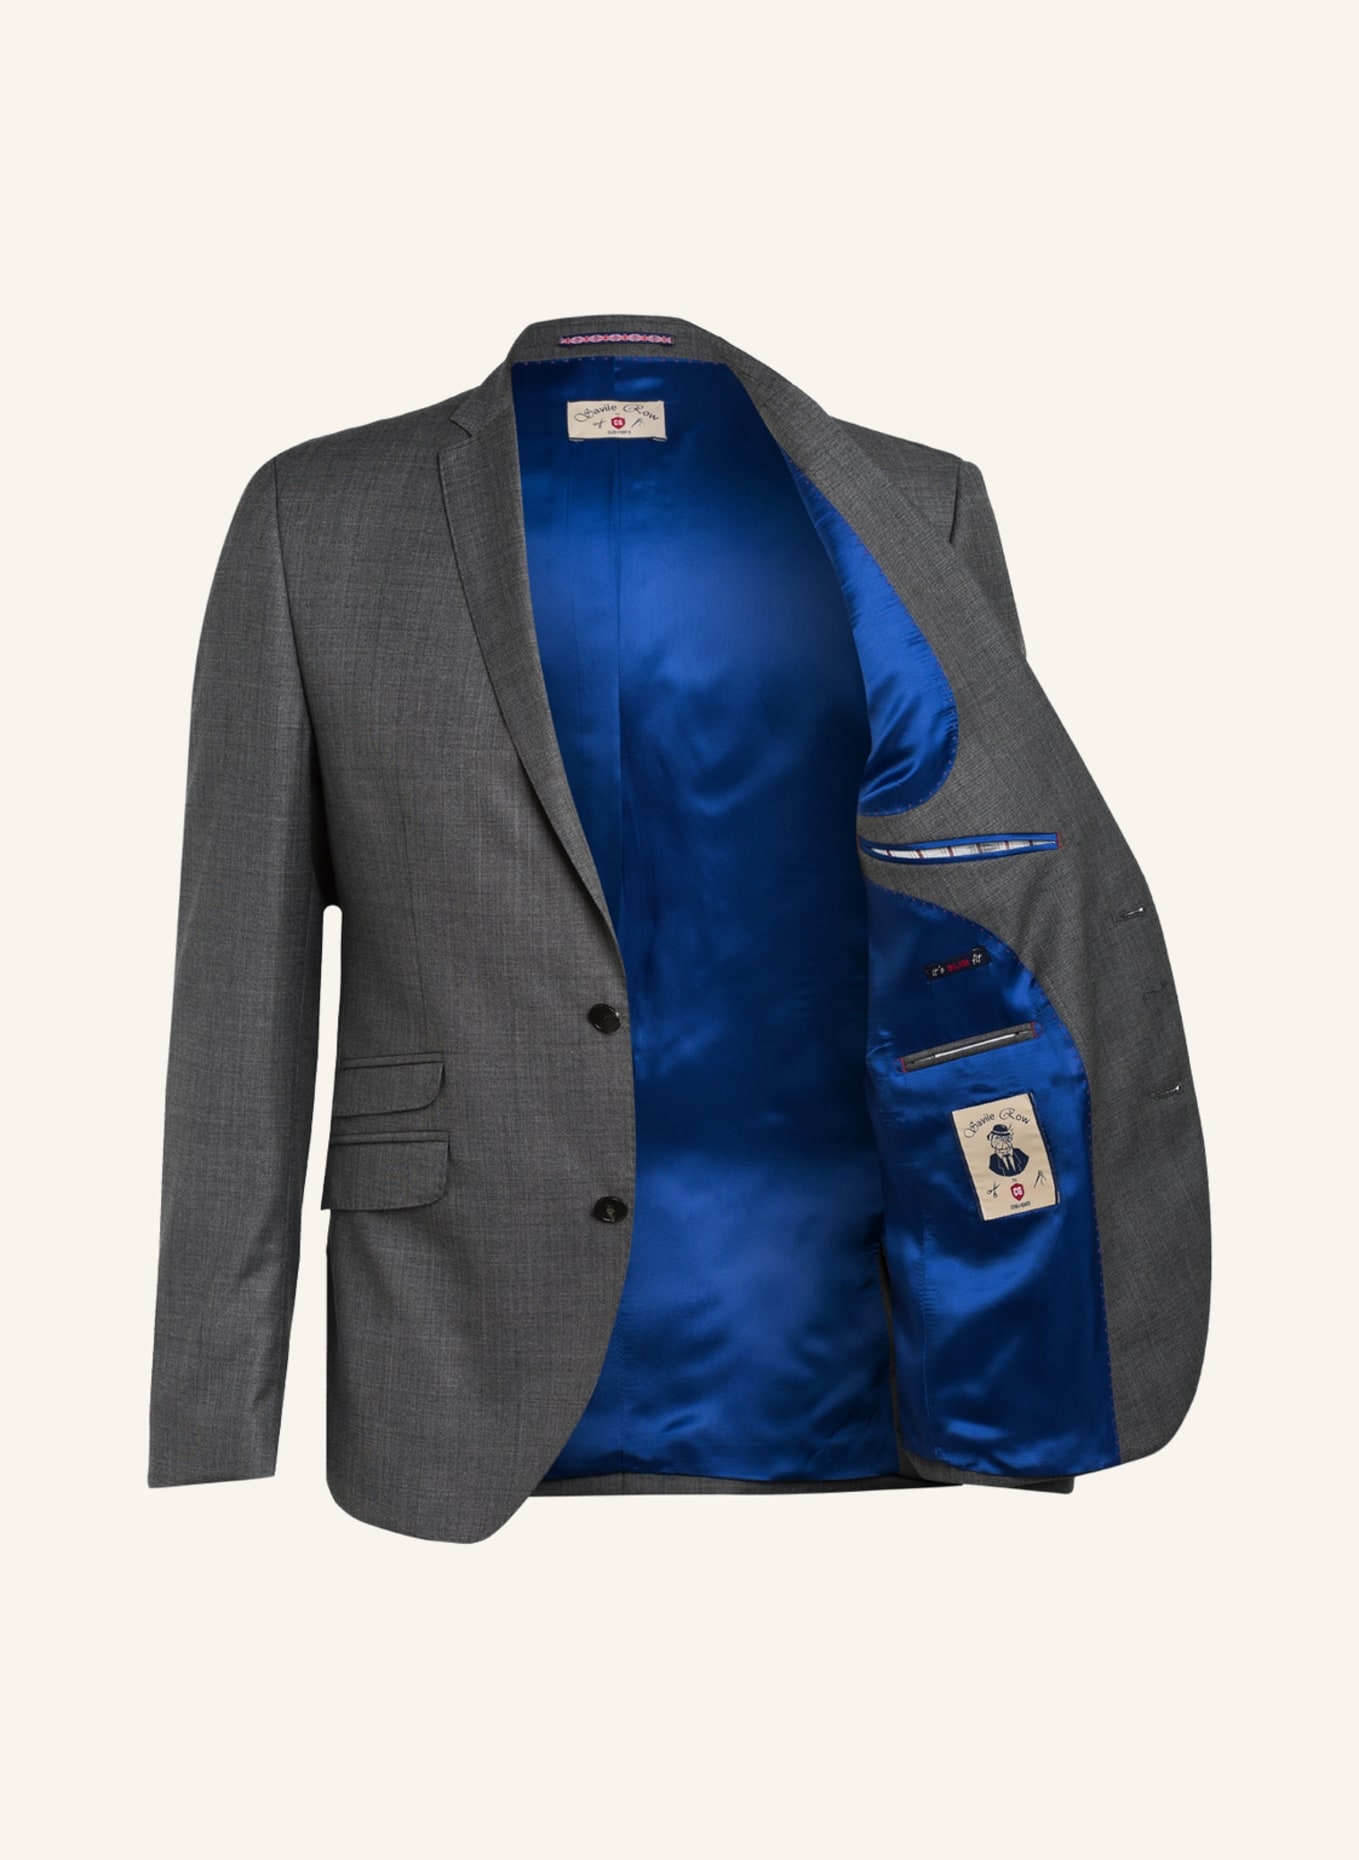 CG - CLUB of GENTS Suit jacket CAMDEN slim fit, Color: 81 grau hell (Image 4)